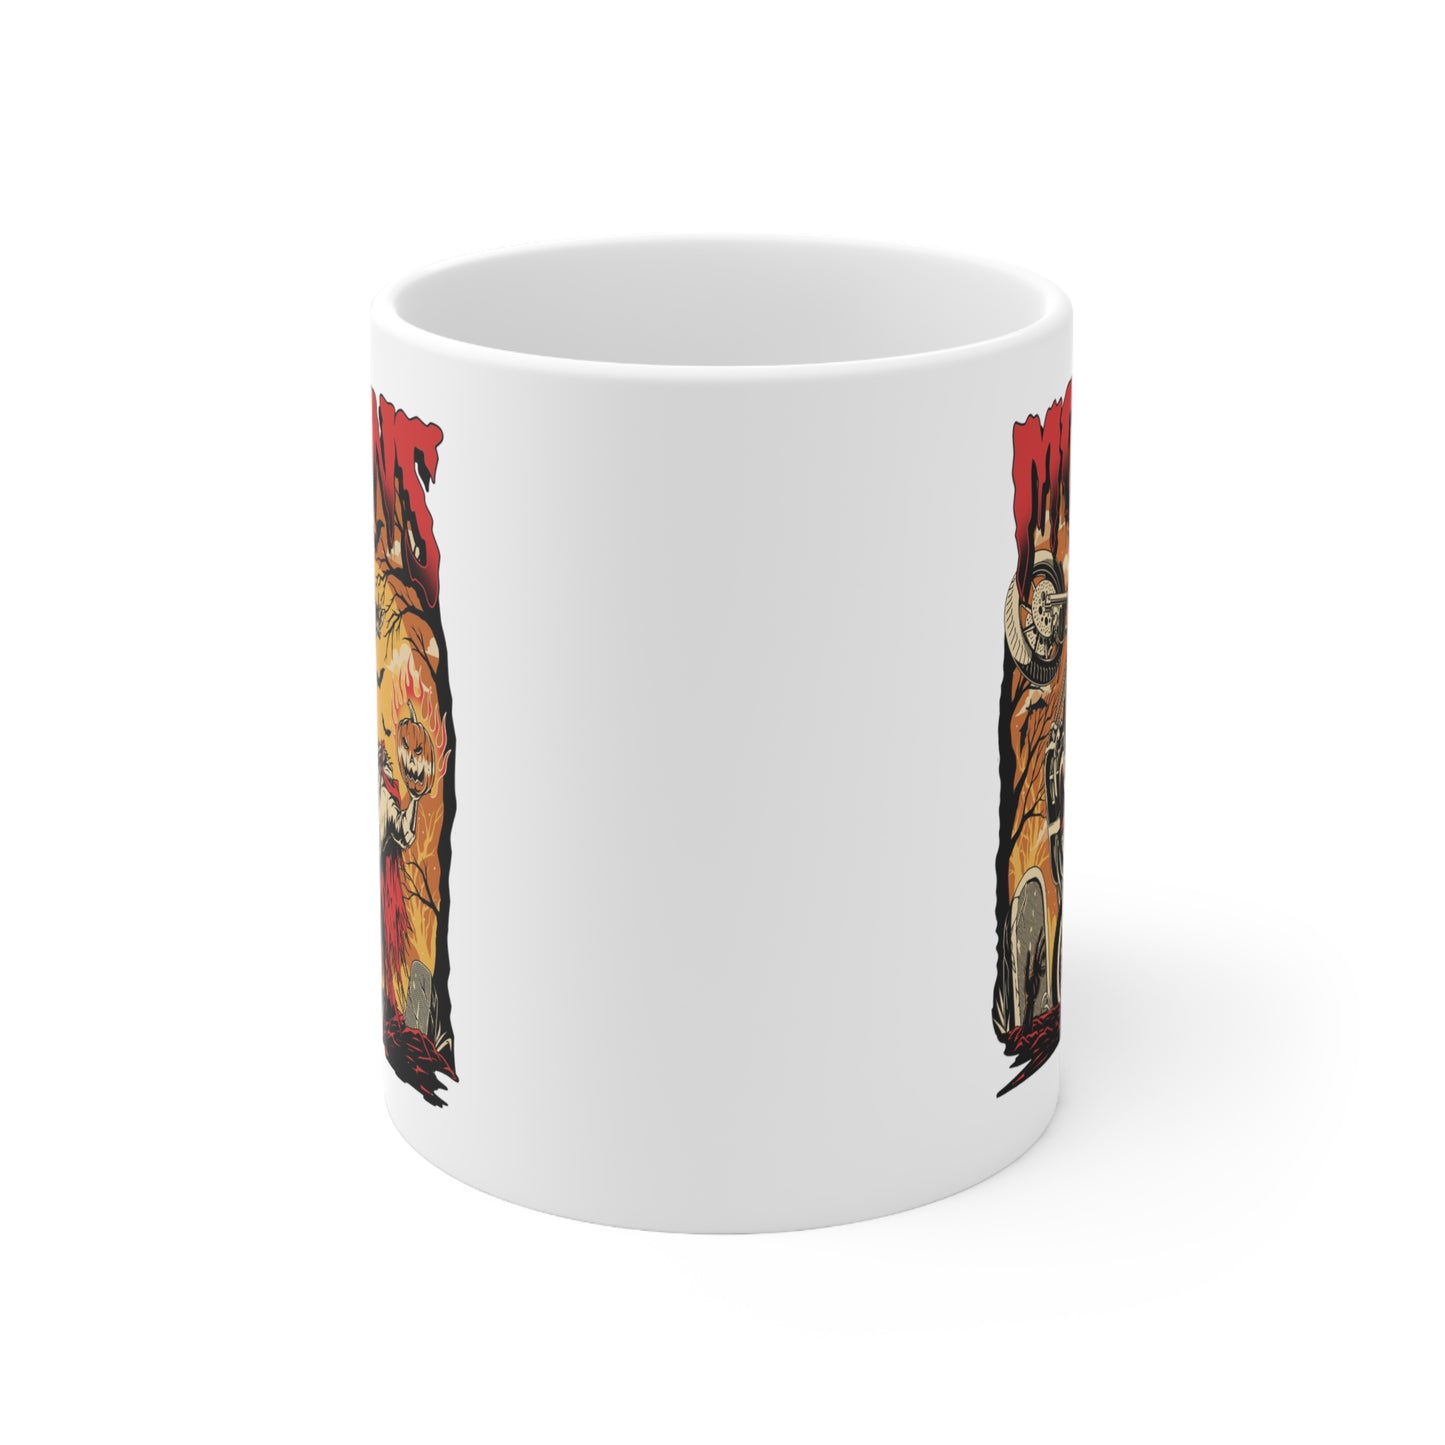 MOONSMC® FXR Headless Horsemen Graveyard Wheelie Ceramic Mug 11oz Red